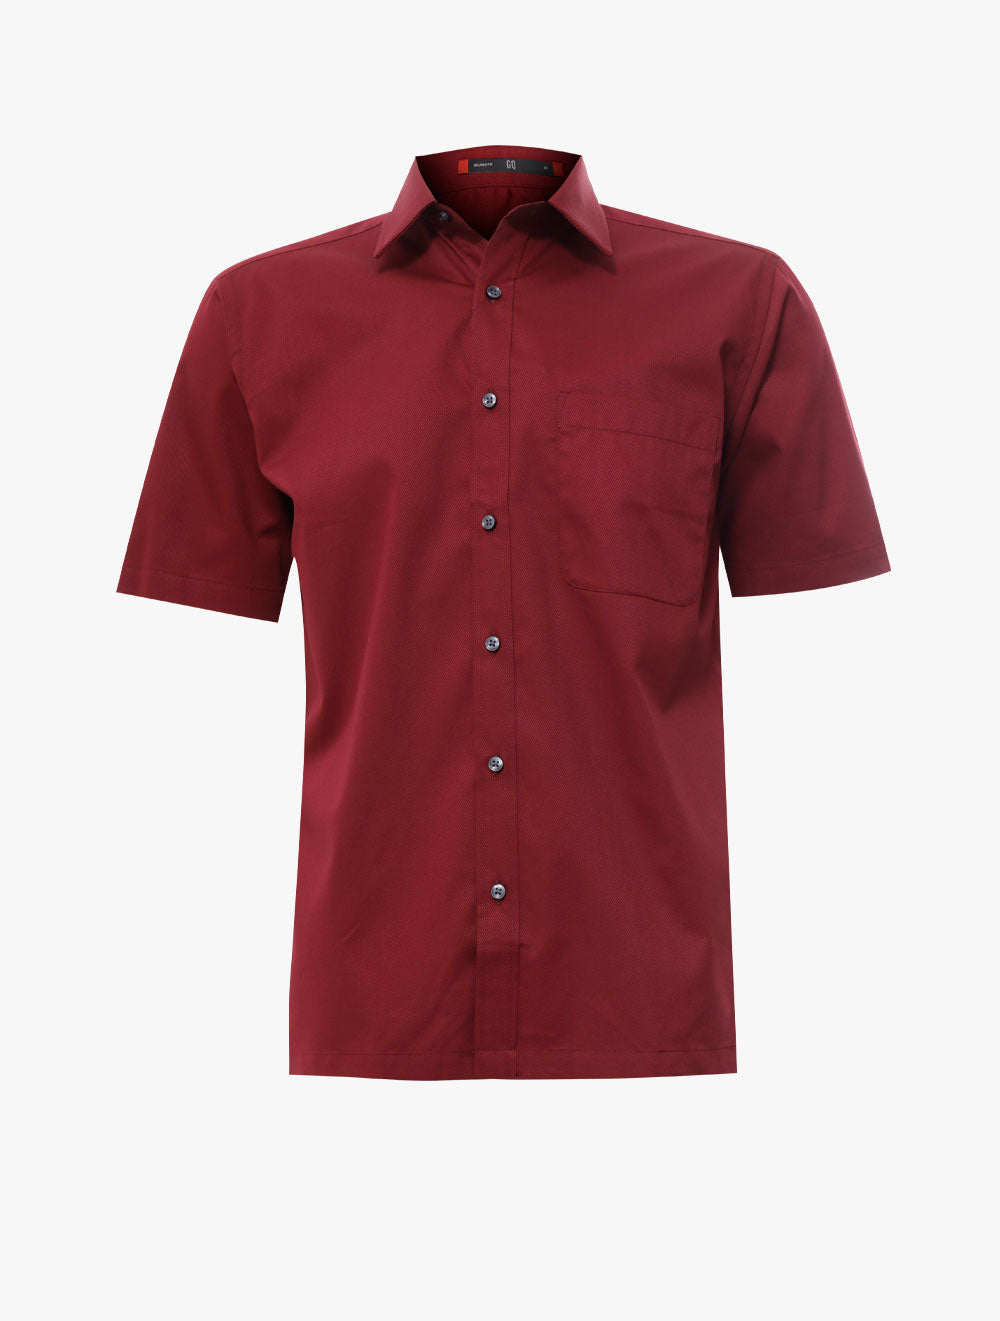 GQ
Casual Short Sleeve Shirt - 1623065